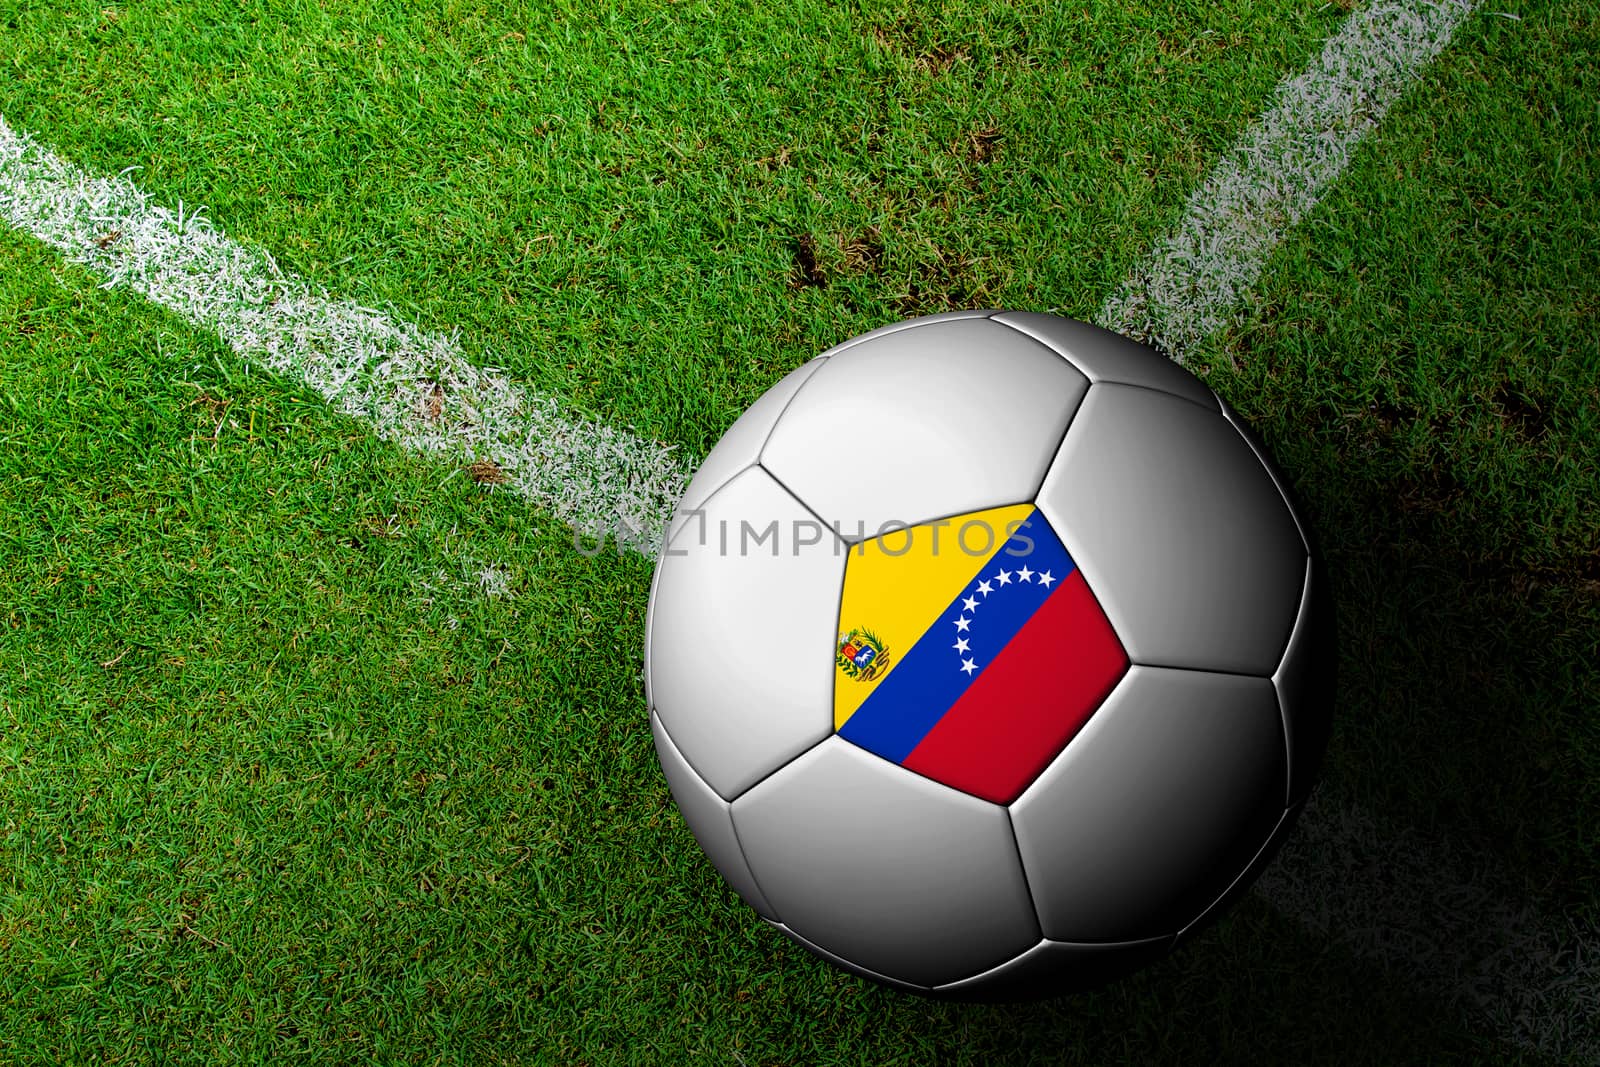 Venezuela Flag Pattern of a soccer ball in green grass by jakgree